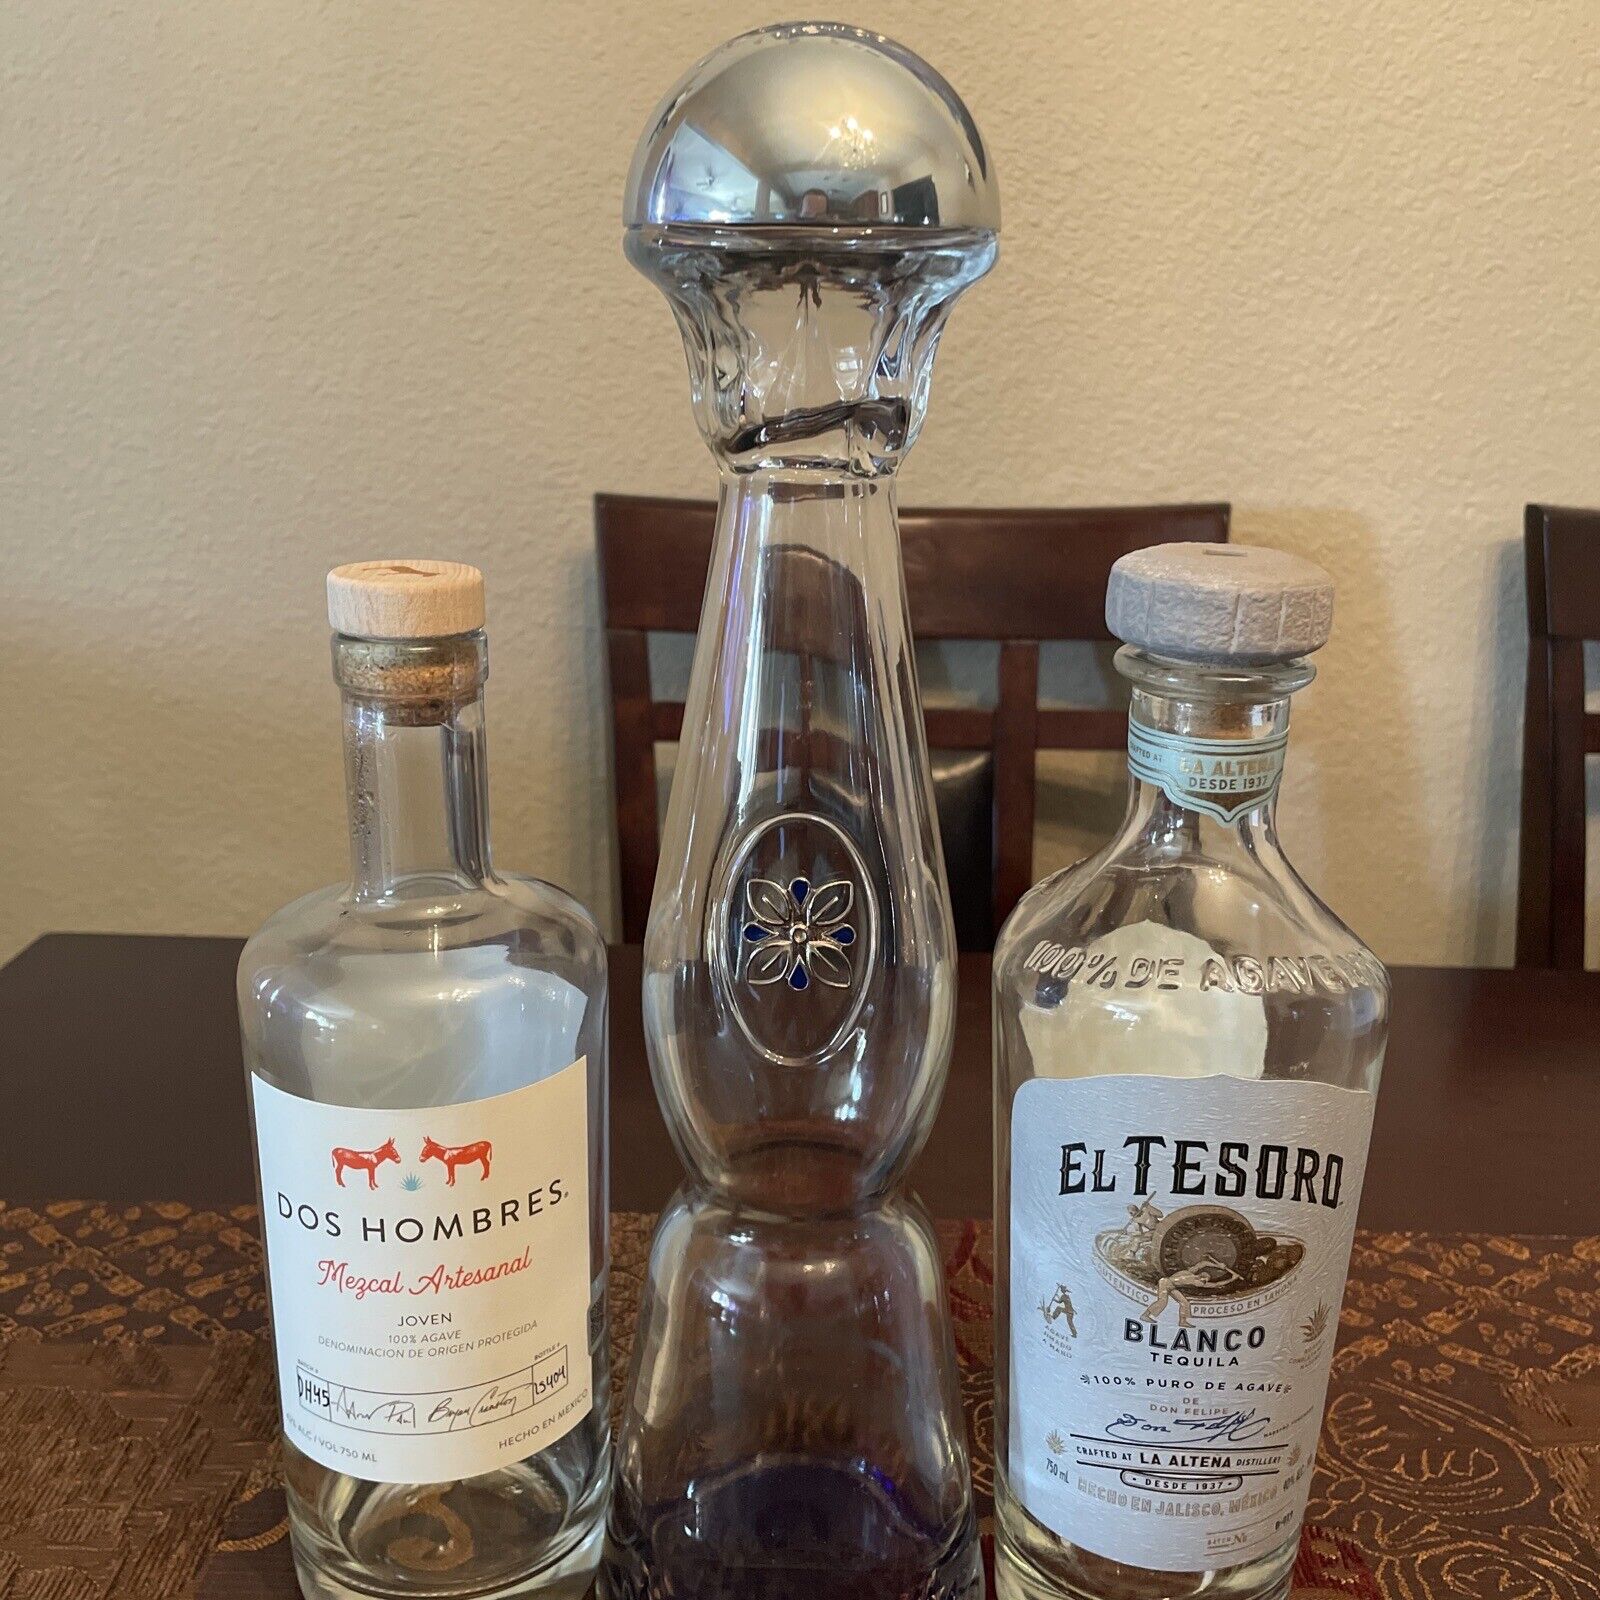 3 Top Shelf Celebrity Tequila Bottles: Clase Azul Plata & Dos Hombres Mezcal